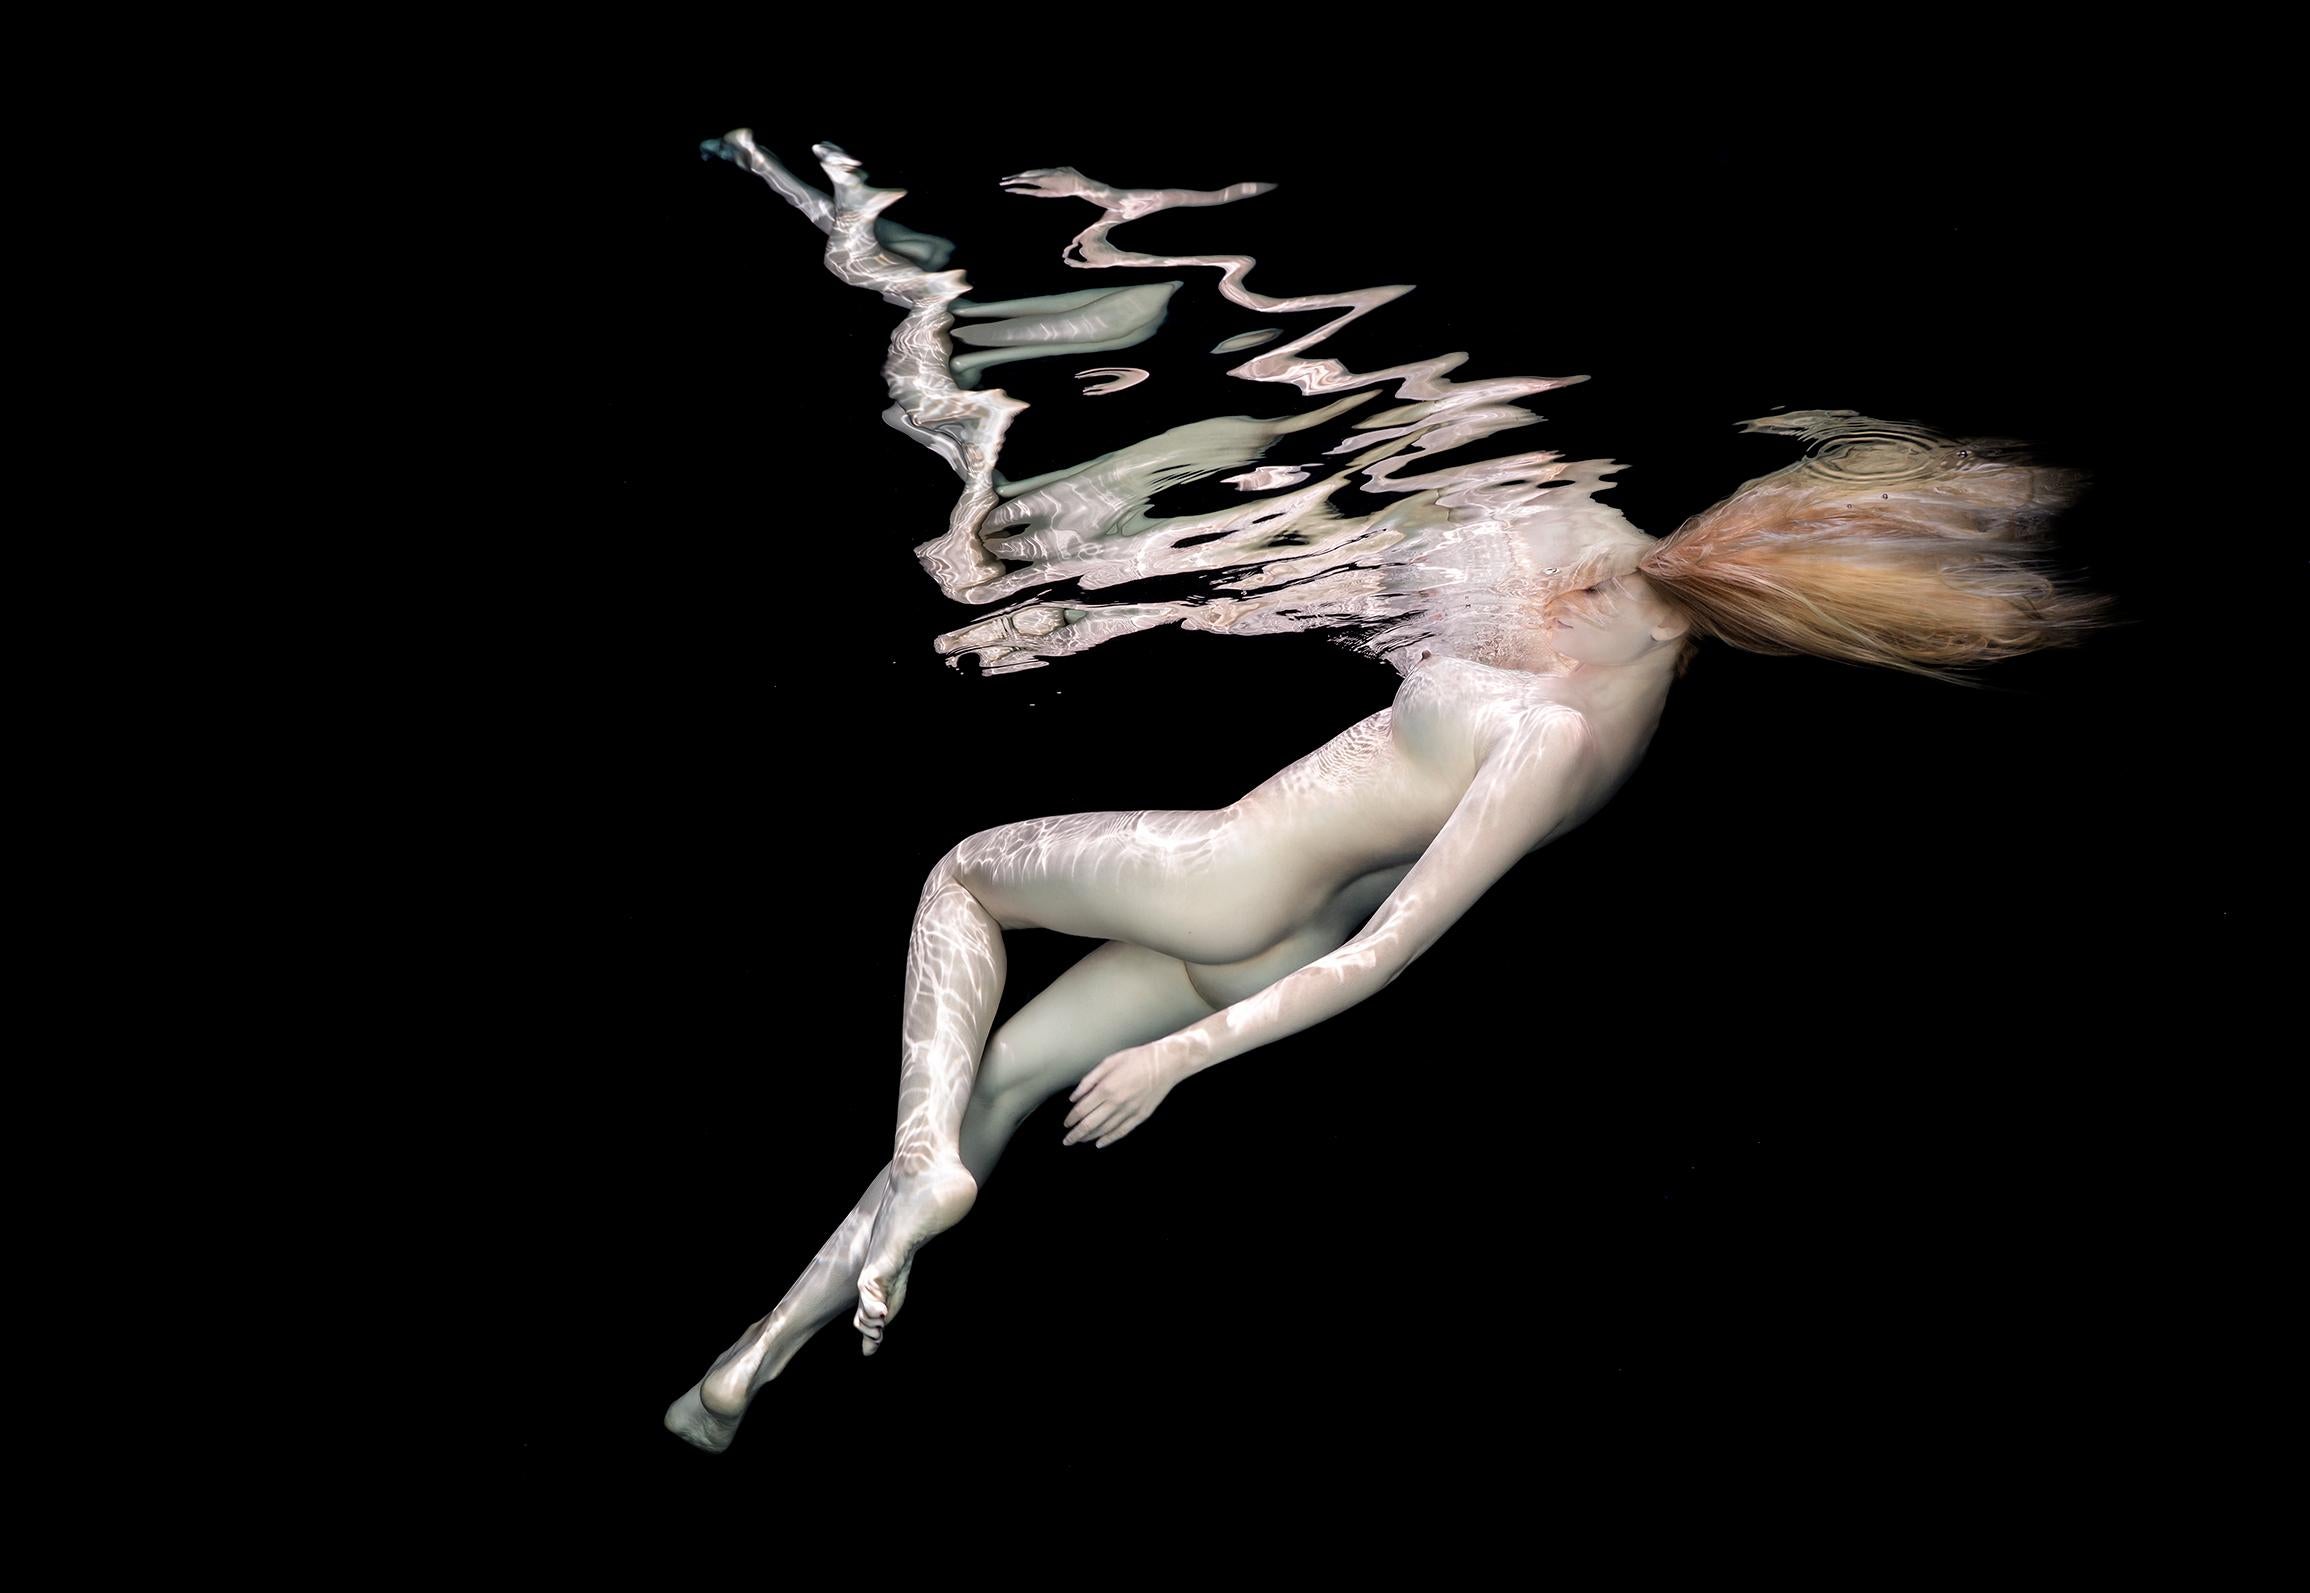 Alex Sher Nude Photograph - Porcelain III  - underwater nude photograph - acrylic print 24" x 36"